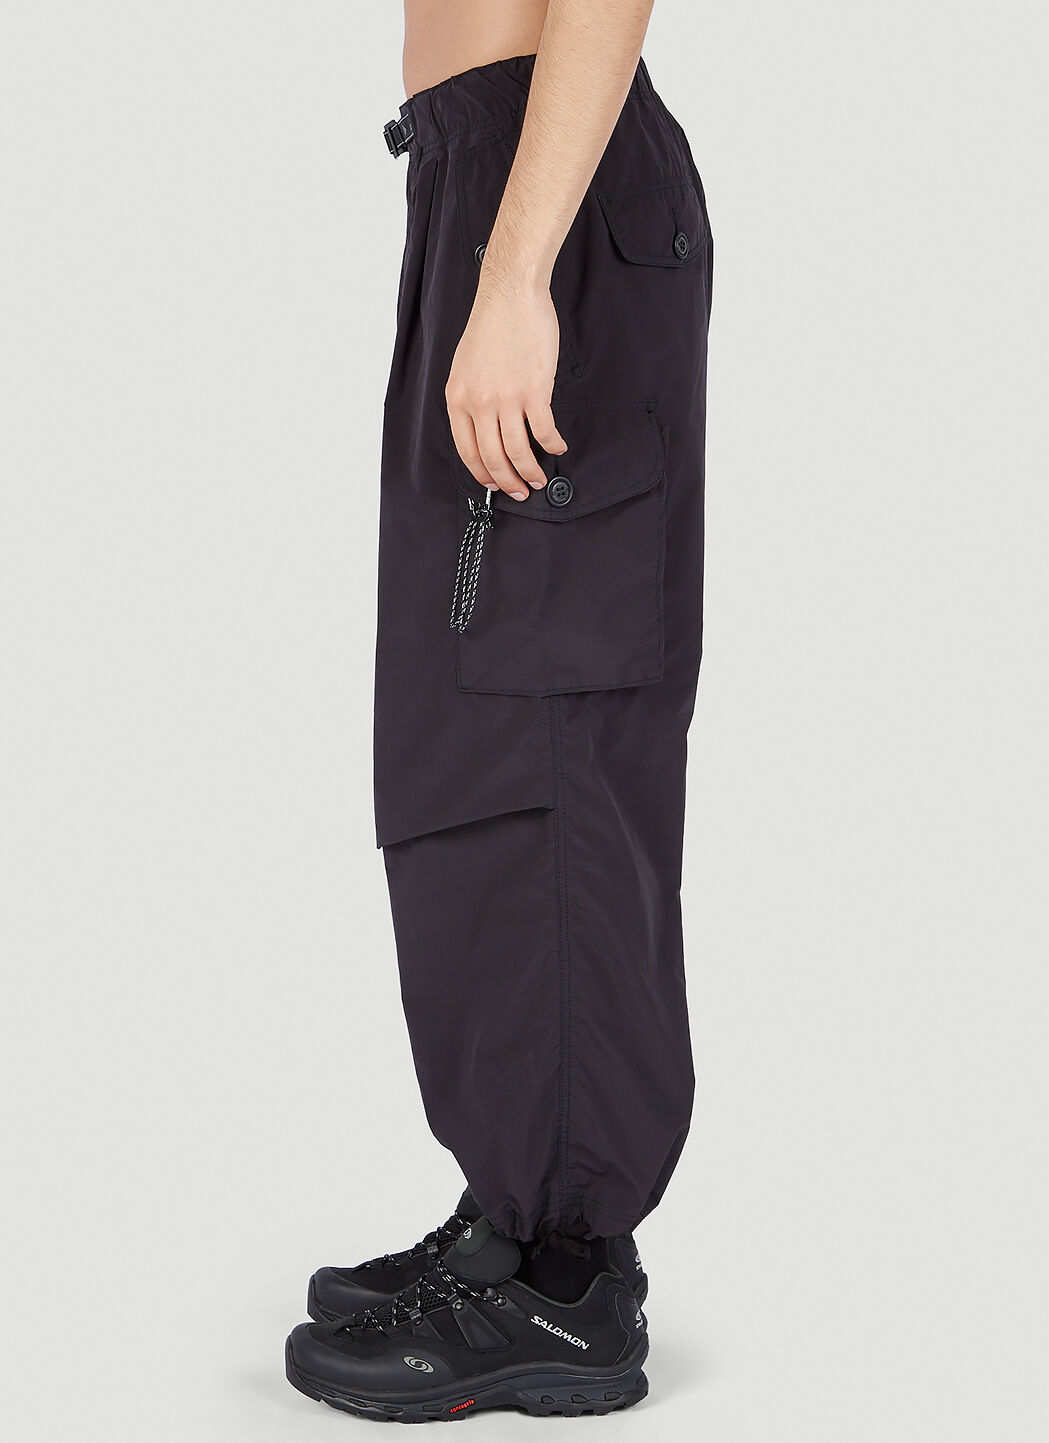 Oversized Cargo Pants Women | eBay